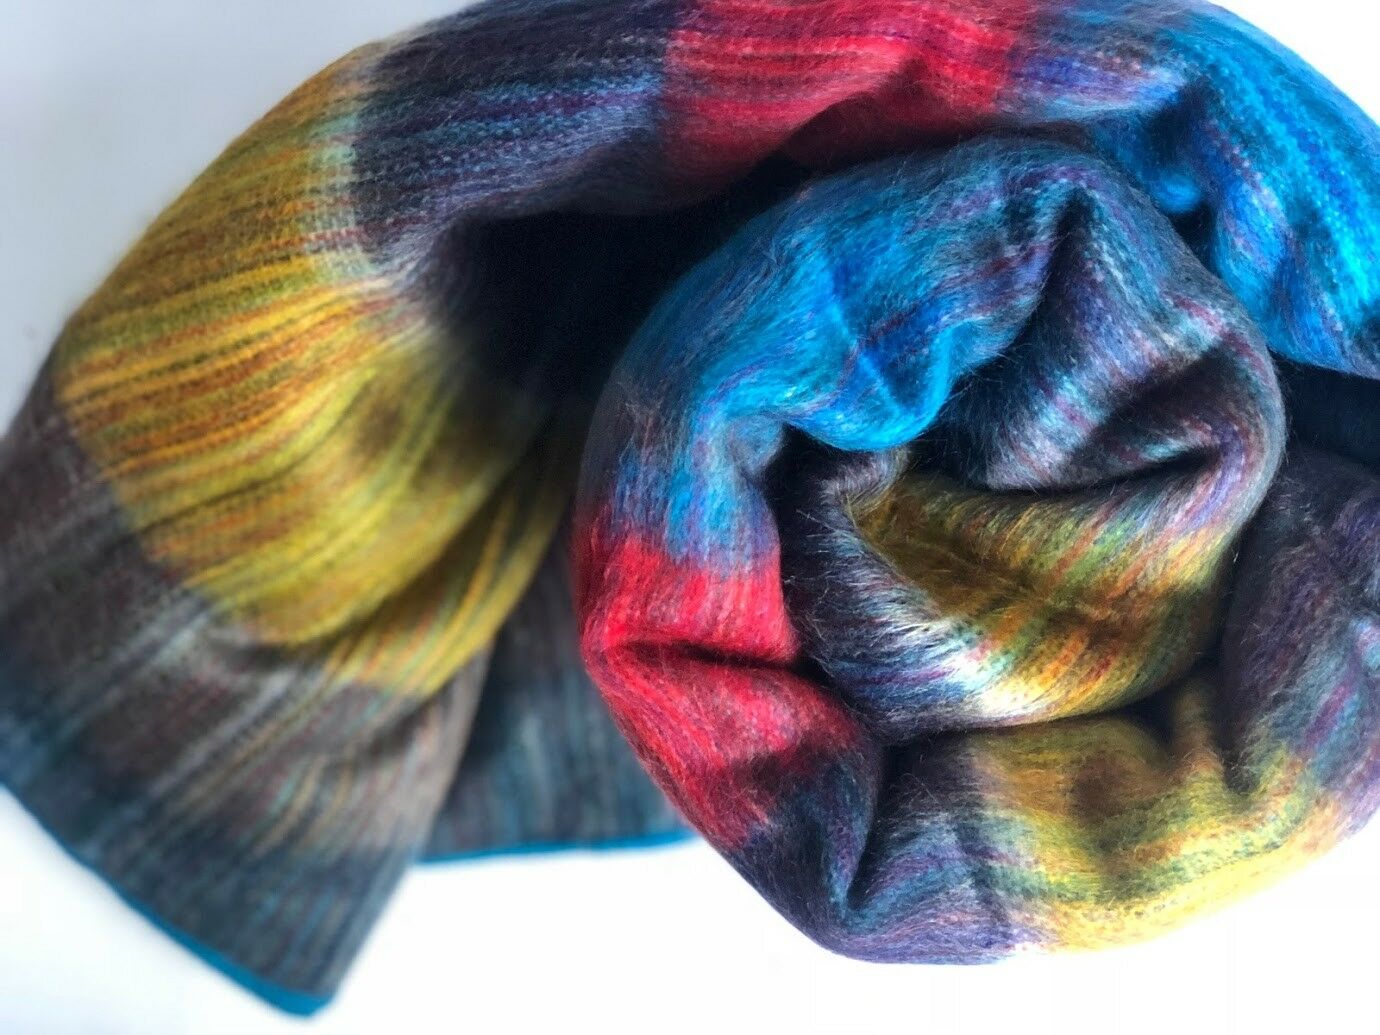 Soft & Warm Baby Alpaca Wool Throw Blanket / Sofa Cover - Queen 90" x 65" - multi colored stripes pattern rainbow